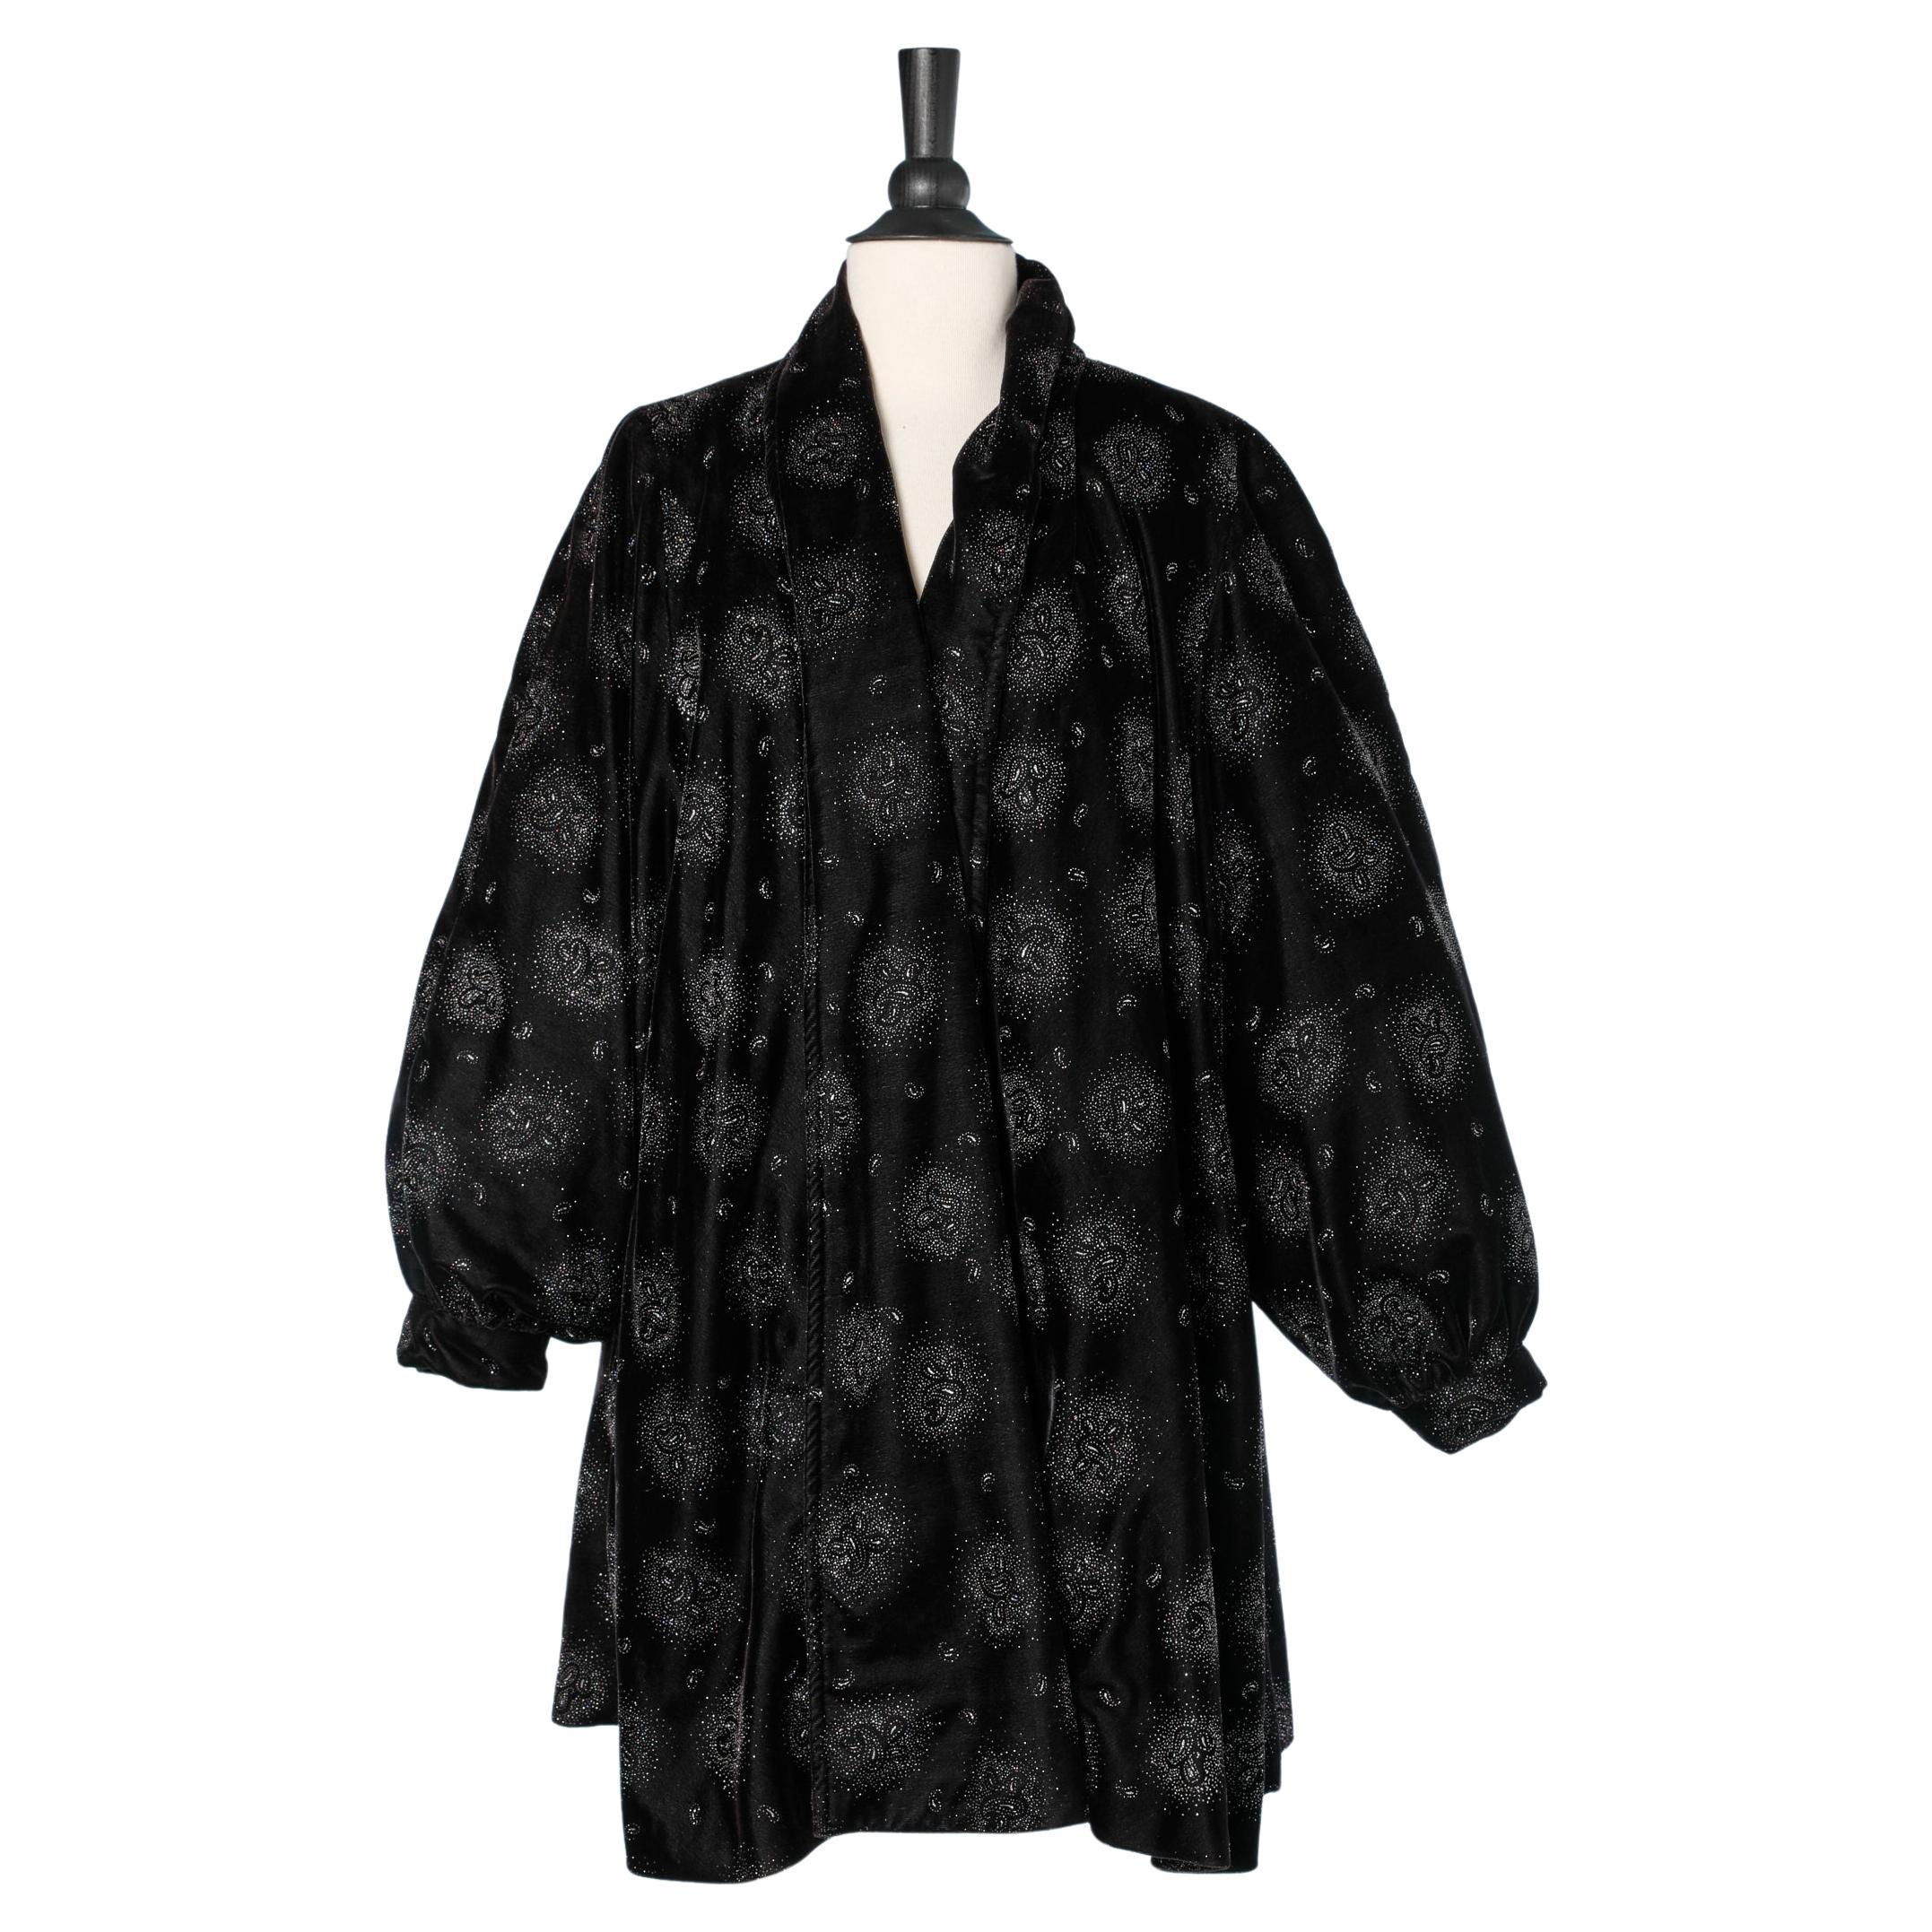 Black velvet evening coat with Paisley glitters pattern Estrosa 